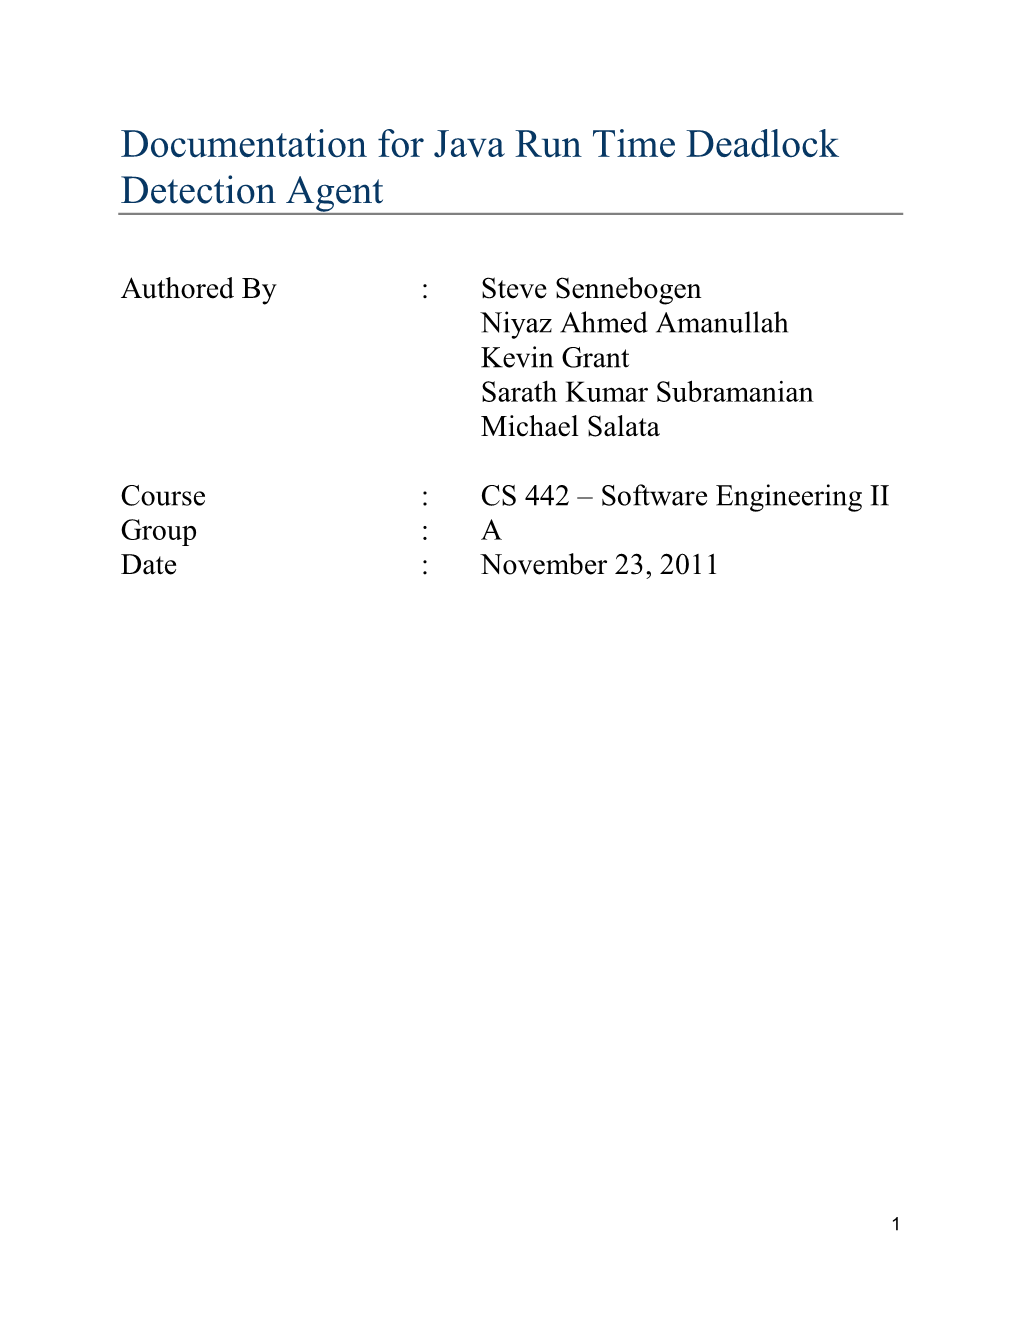 Documentation for Java Run Time Deadlock Detection Agent